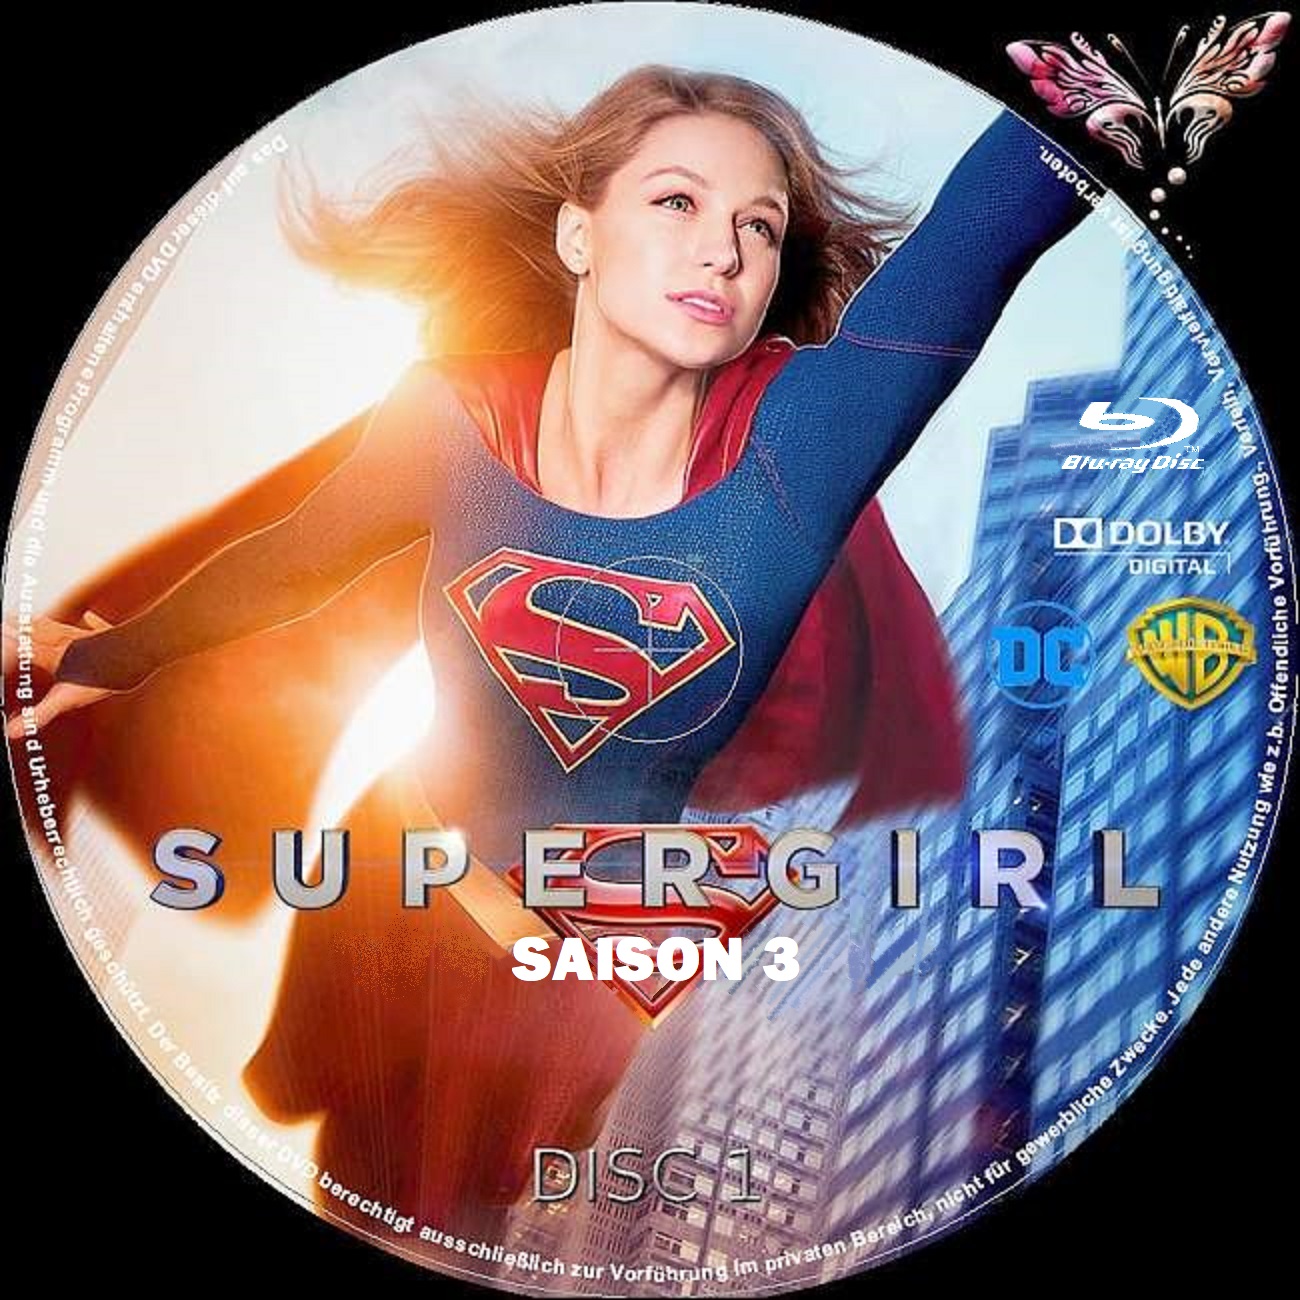 Supergirl saison 3 custom (BLU-RAY) DISC 1